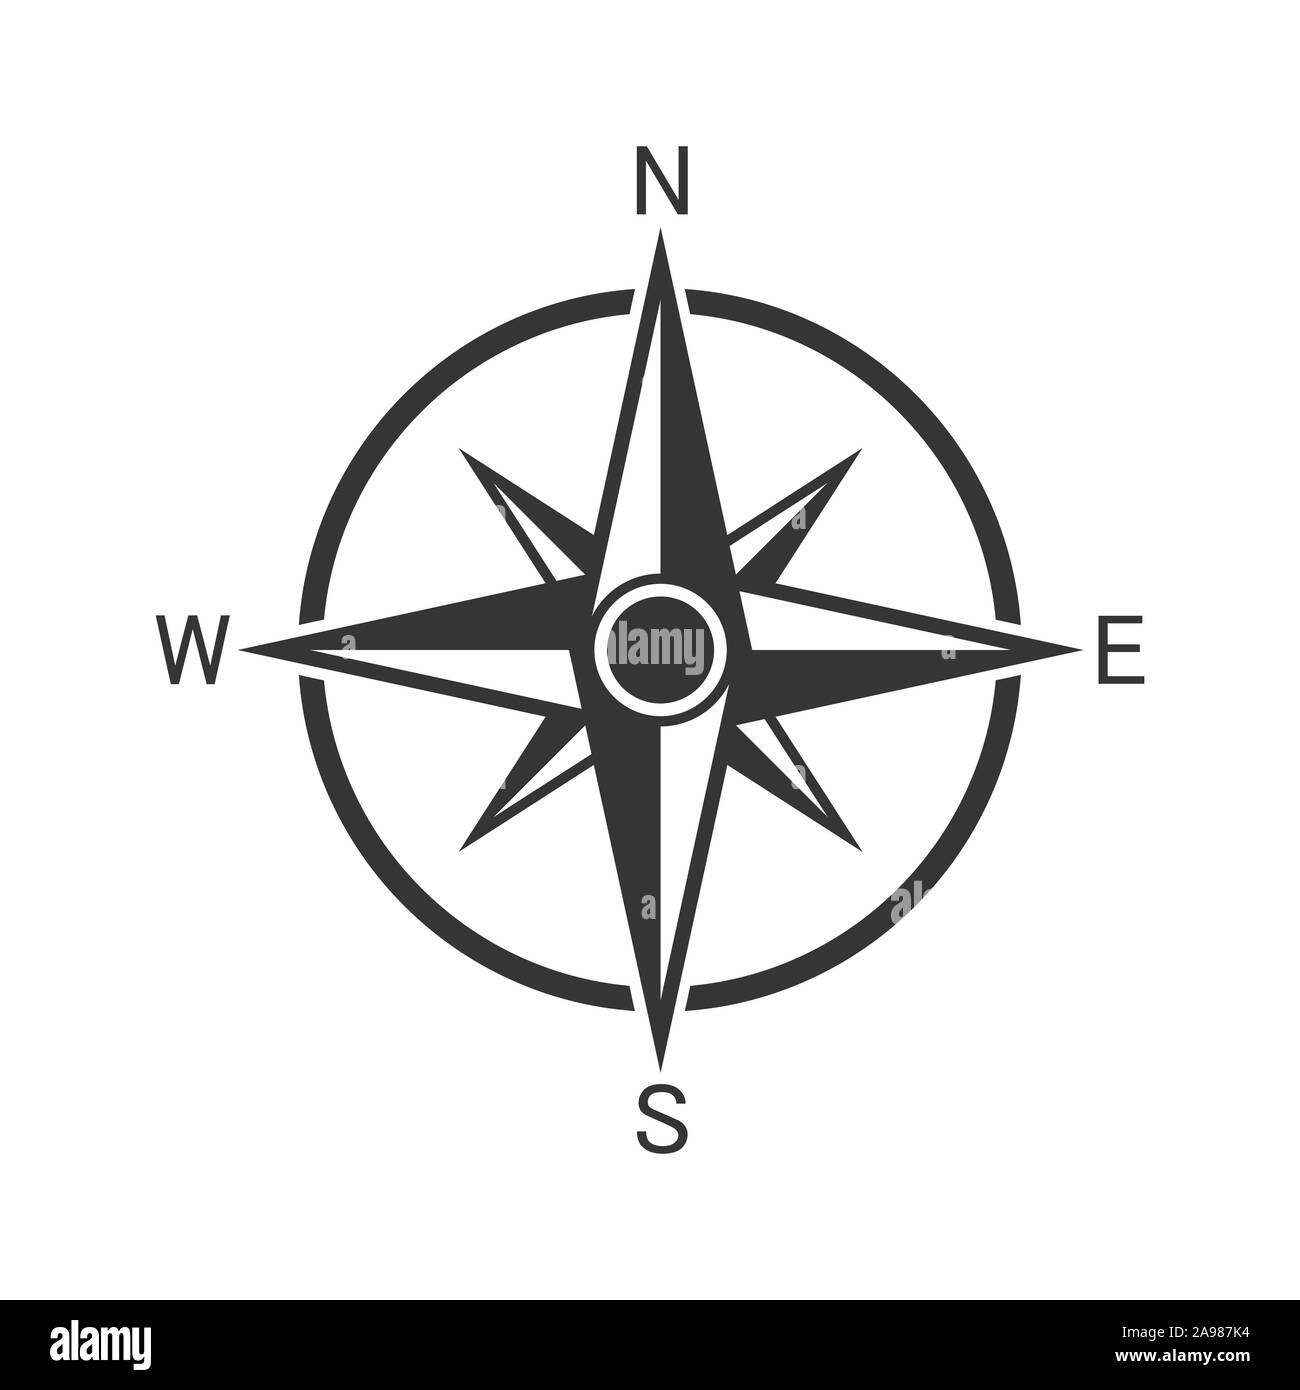 Vektor Kompass Symbol. Kompass Symbol Navigation. Schwarz Kompass Symbol im  flachen Stil. Compass Rose, Wind Rose Stock-Vektorgrafik - Alamy